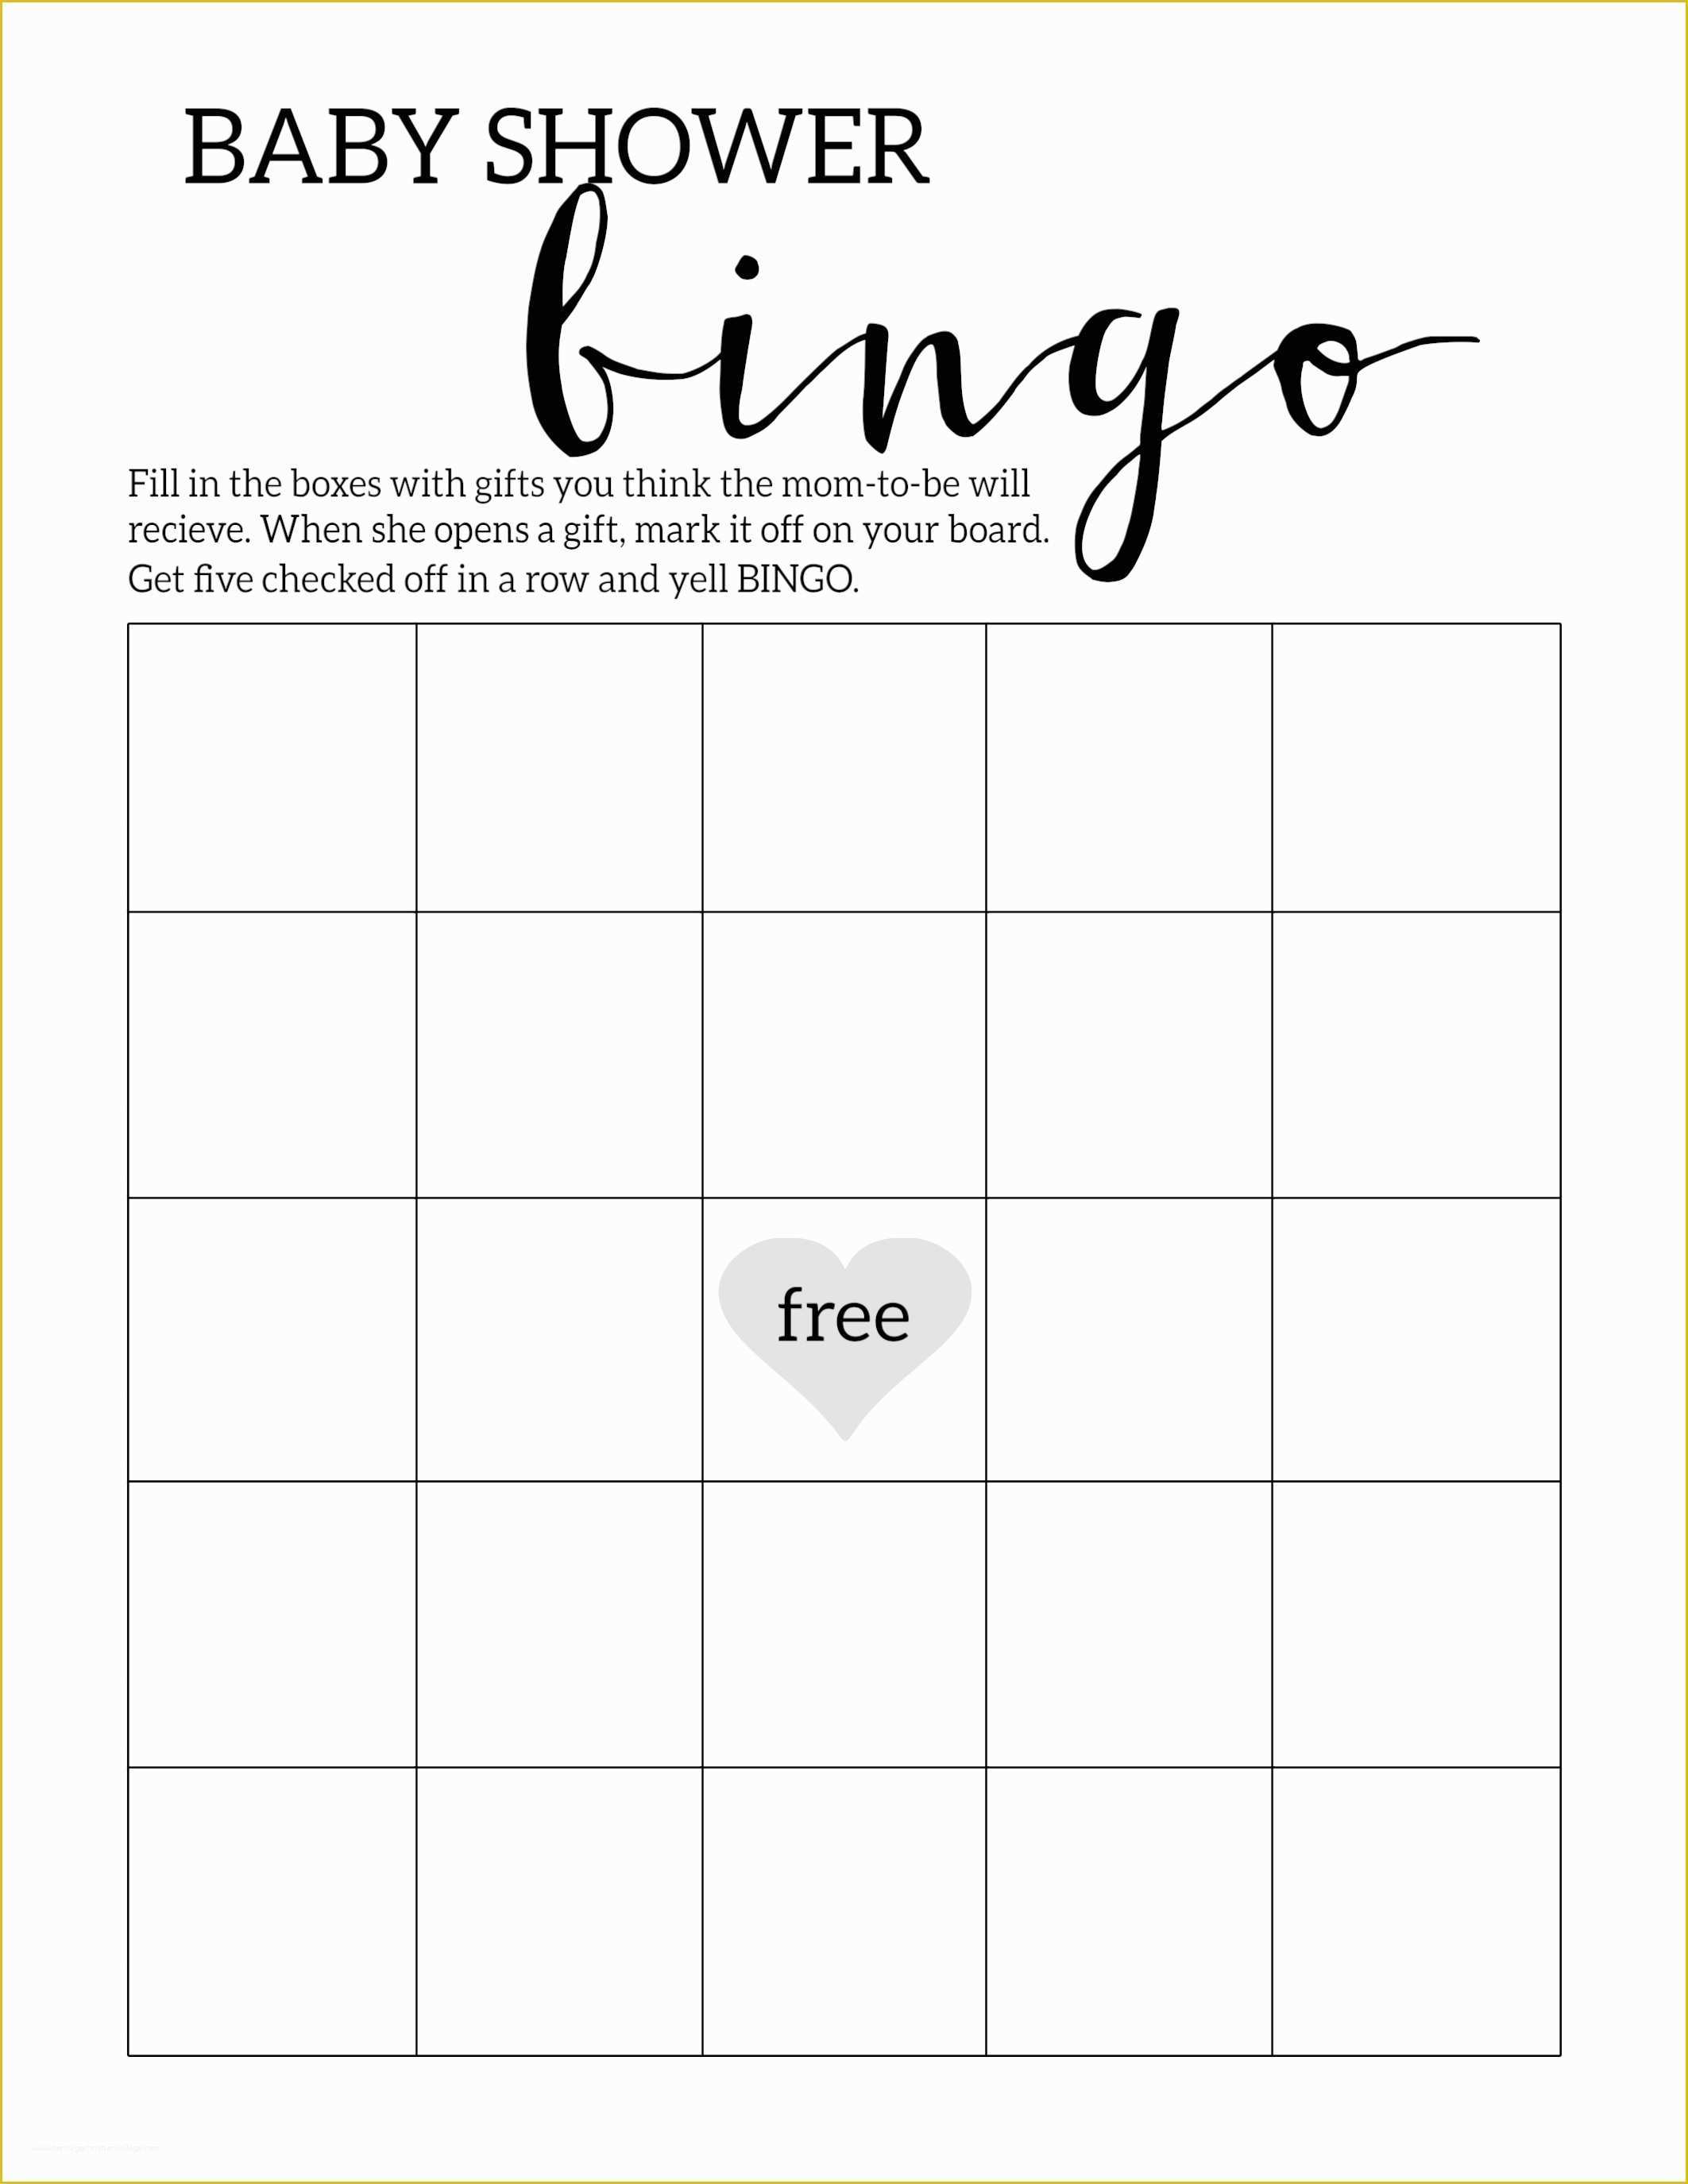 free-baby-shower-bingo-blank-template-of-baby-shower-bingo-printable